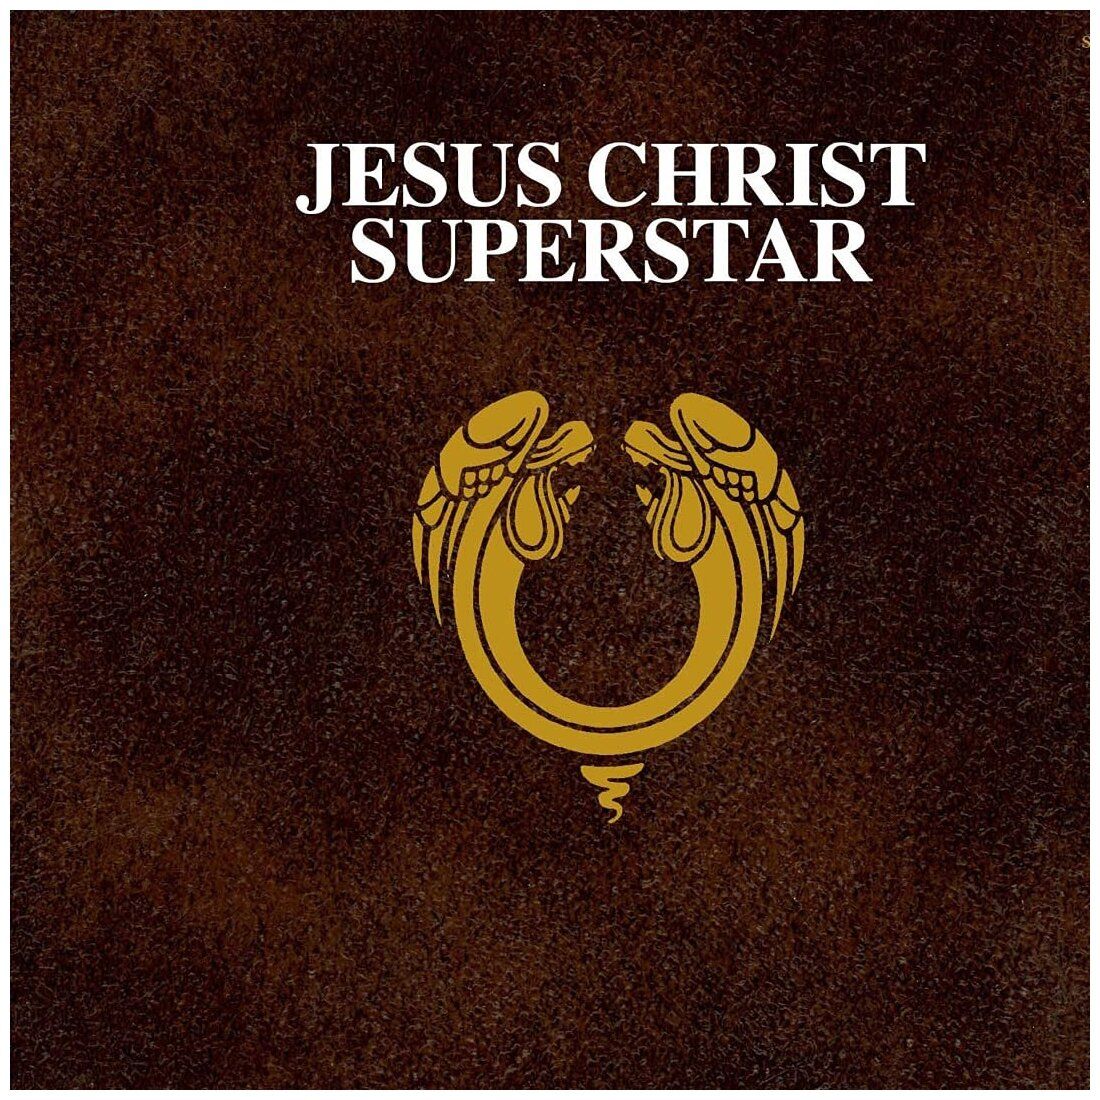 Виниловая пластинка Webber, Andrew Lloyd, Jesus Christ Superstar (0600753933312) компакт диски mca records ost jesus christ superstar andrew lloyd webber 2cd